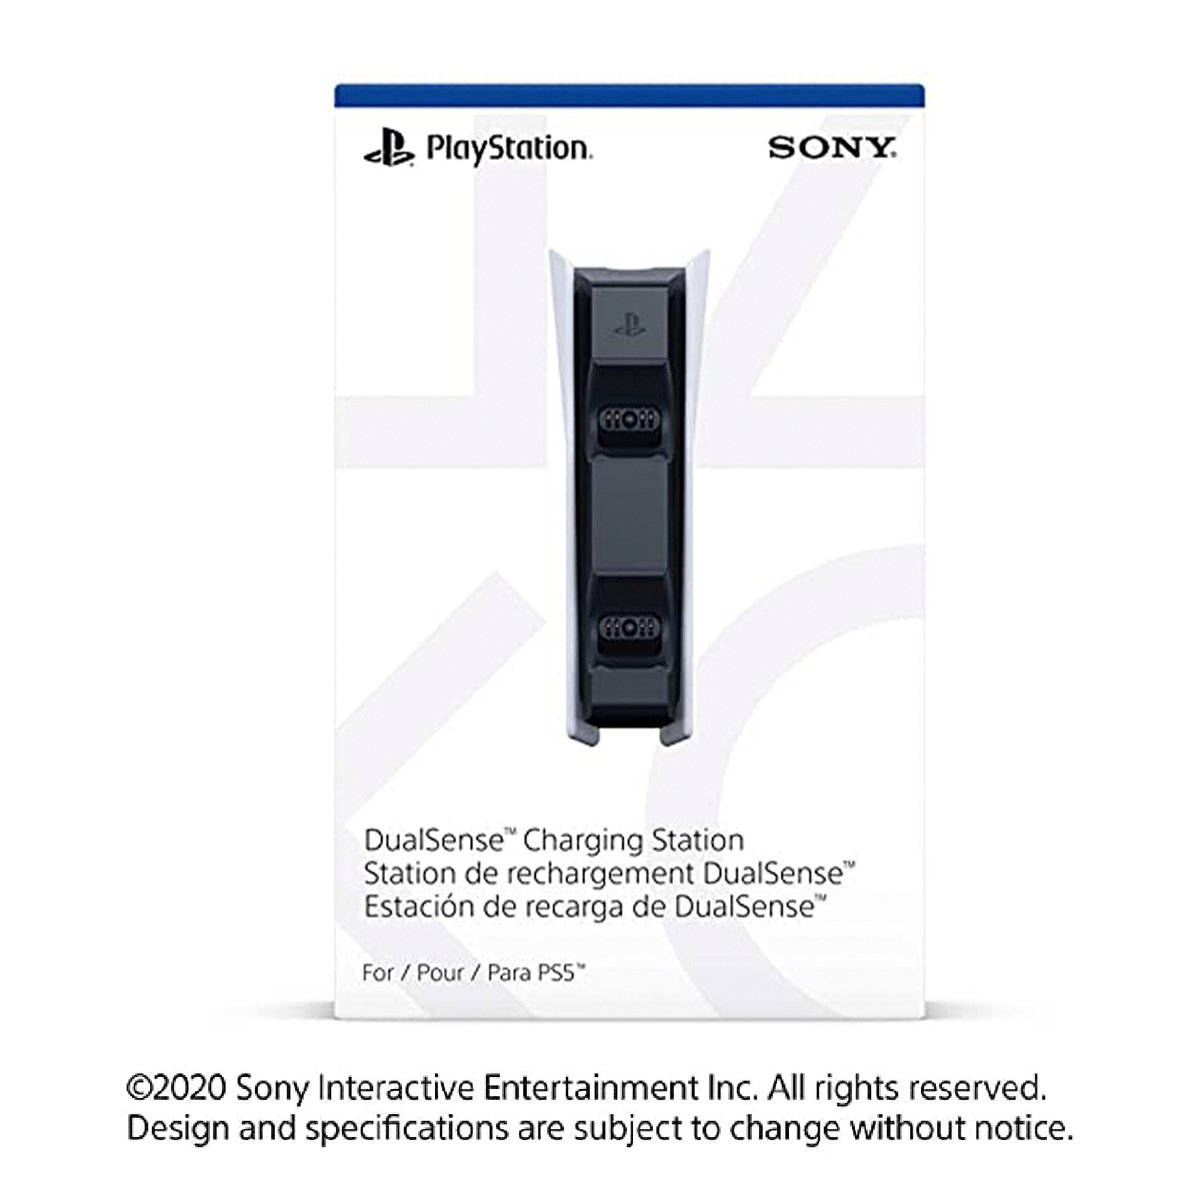 Sony PlayStation DualSense Charging Station